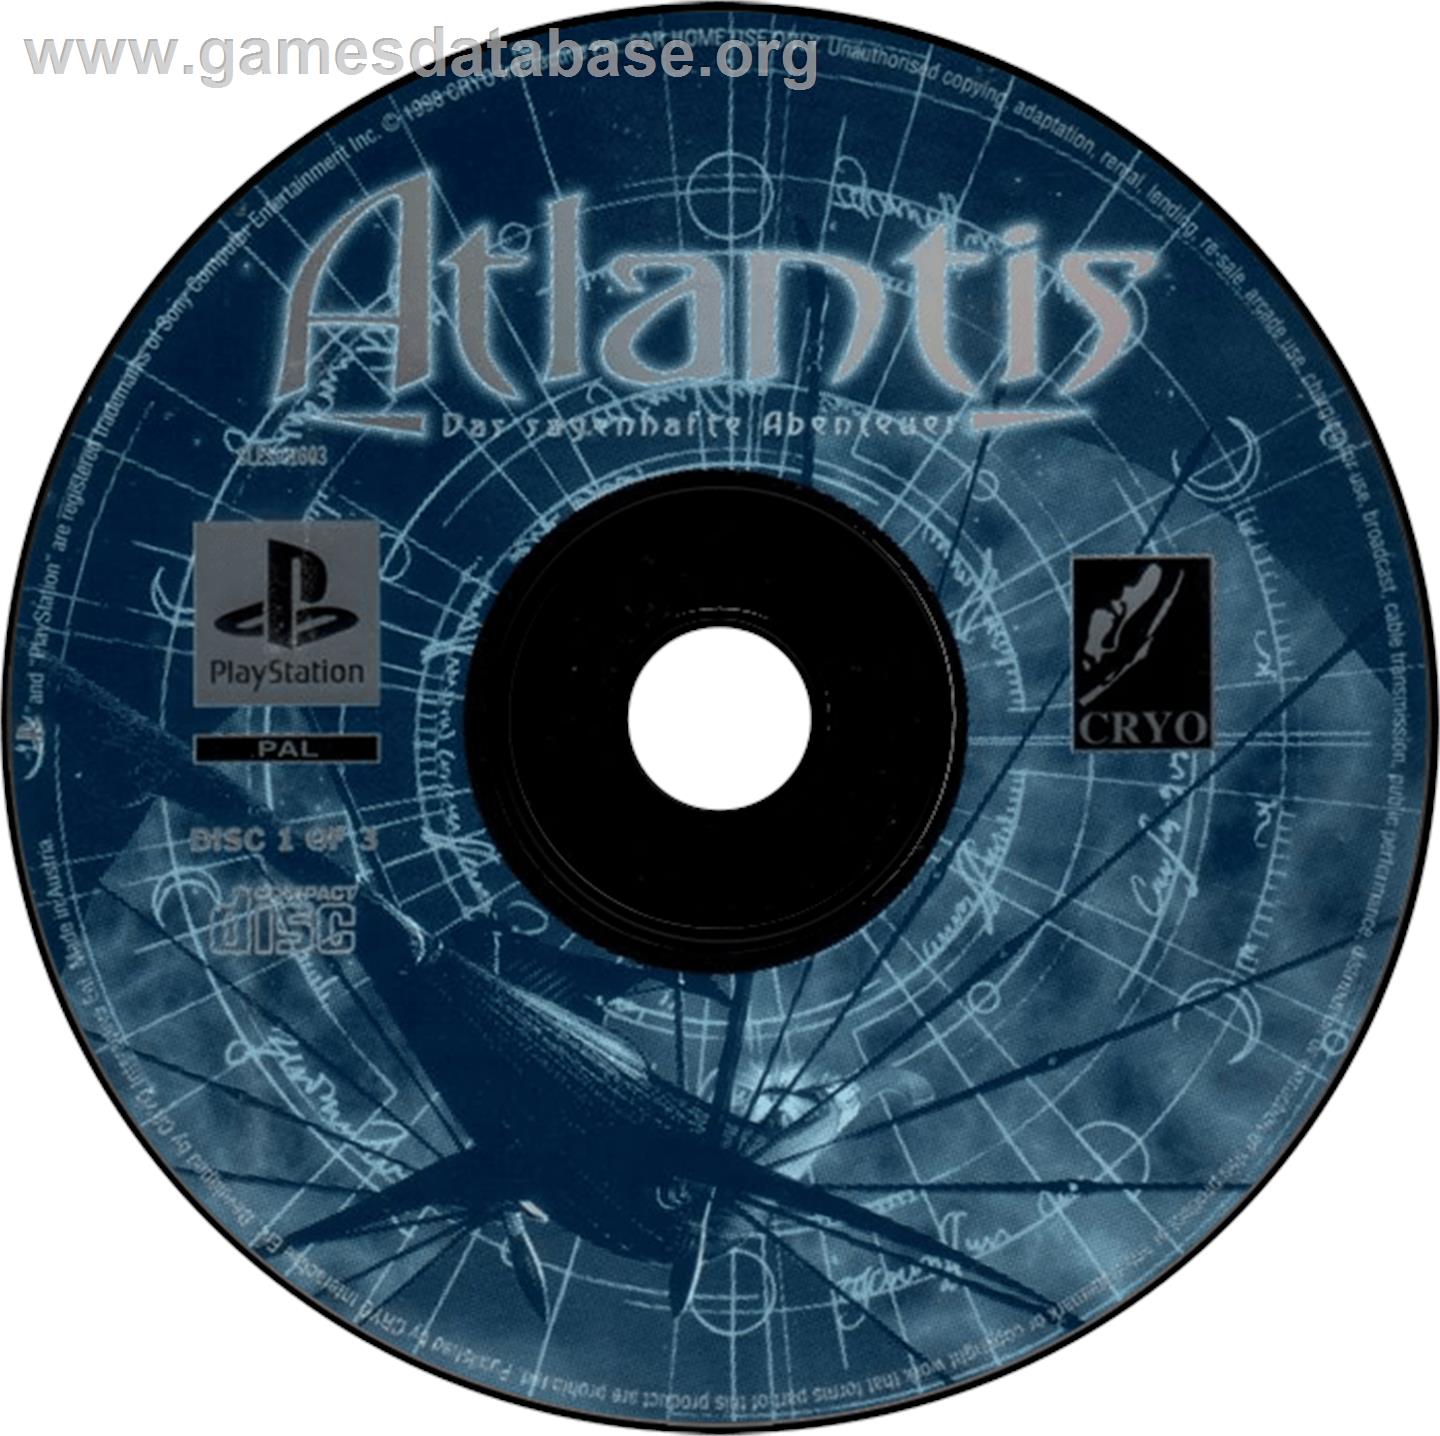 Atlantis: The Lost Tales - Sony Playstation - Artwork - Disc